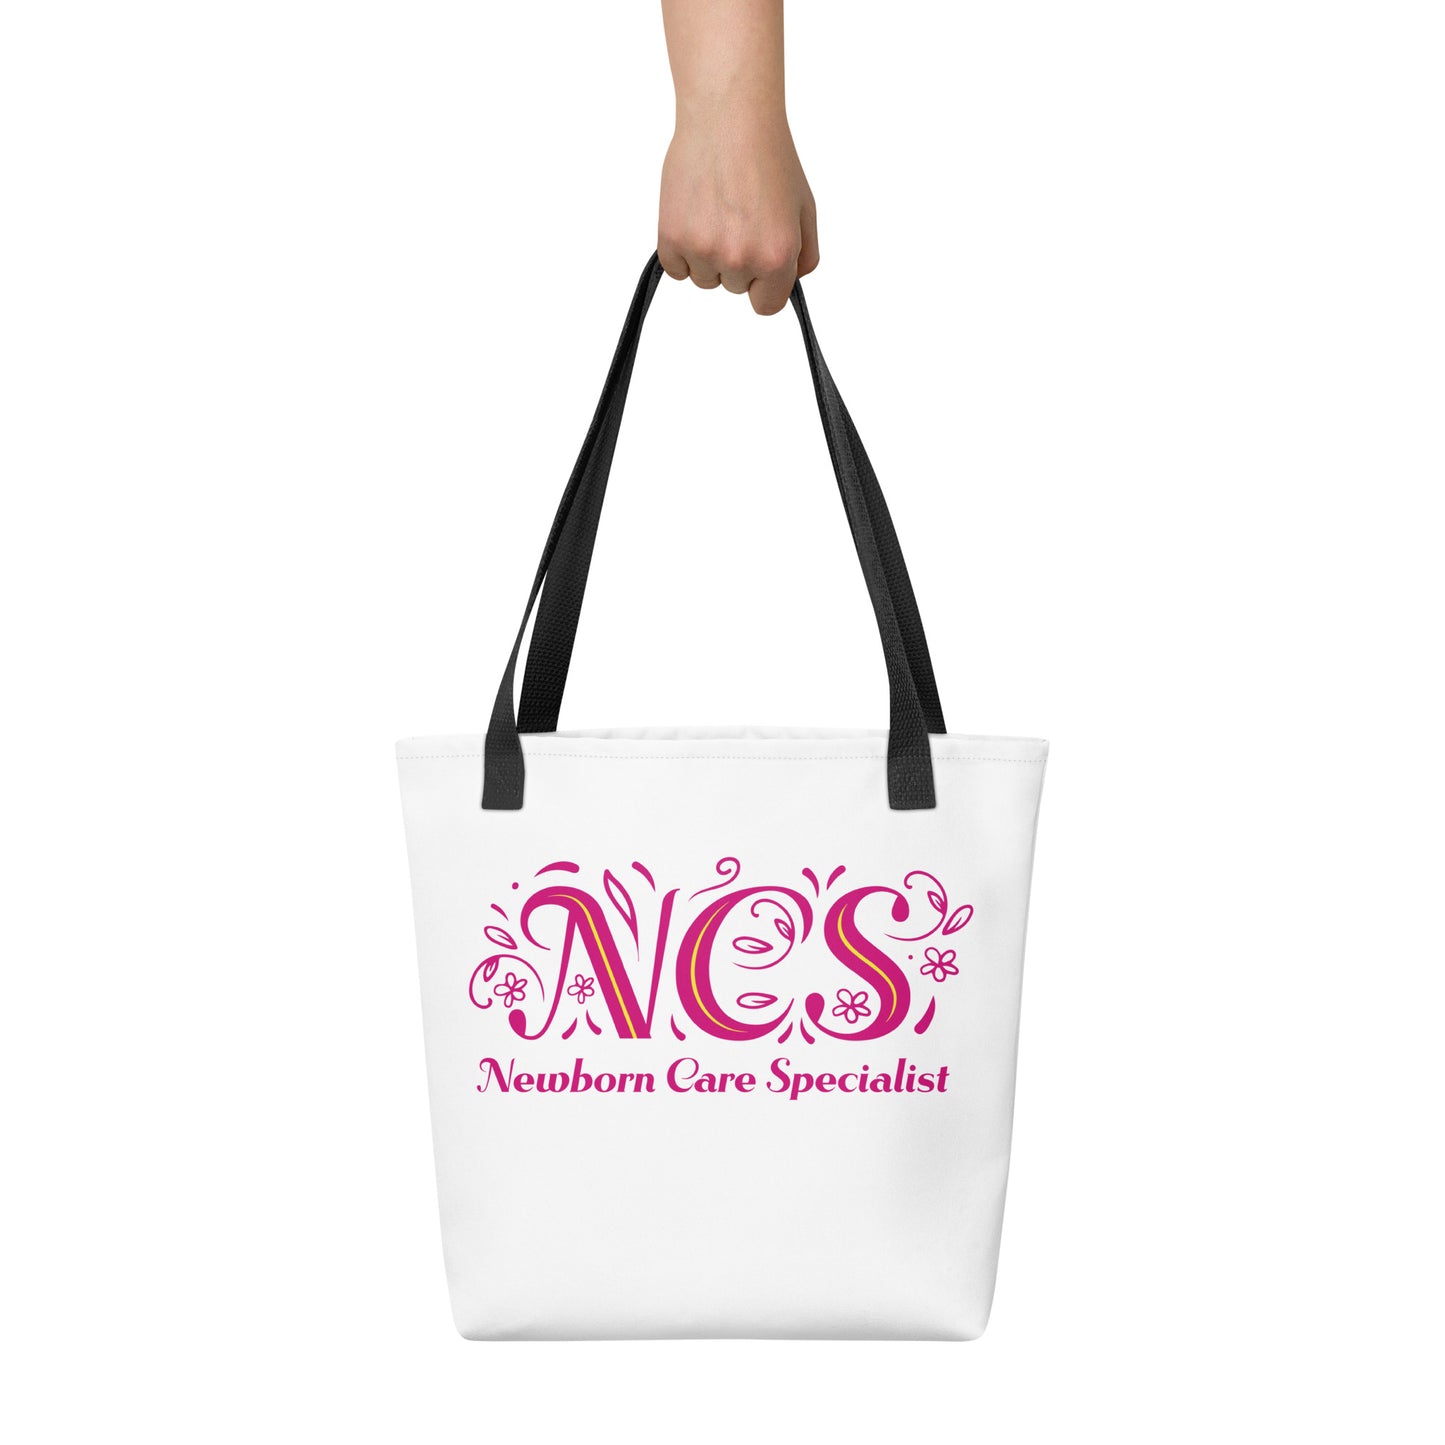 NCS Newborn Care Specialist tote bag